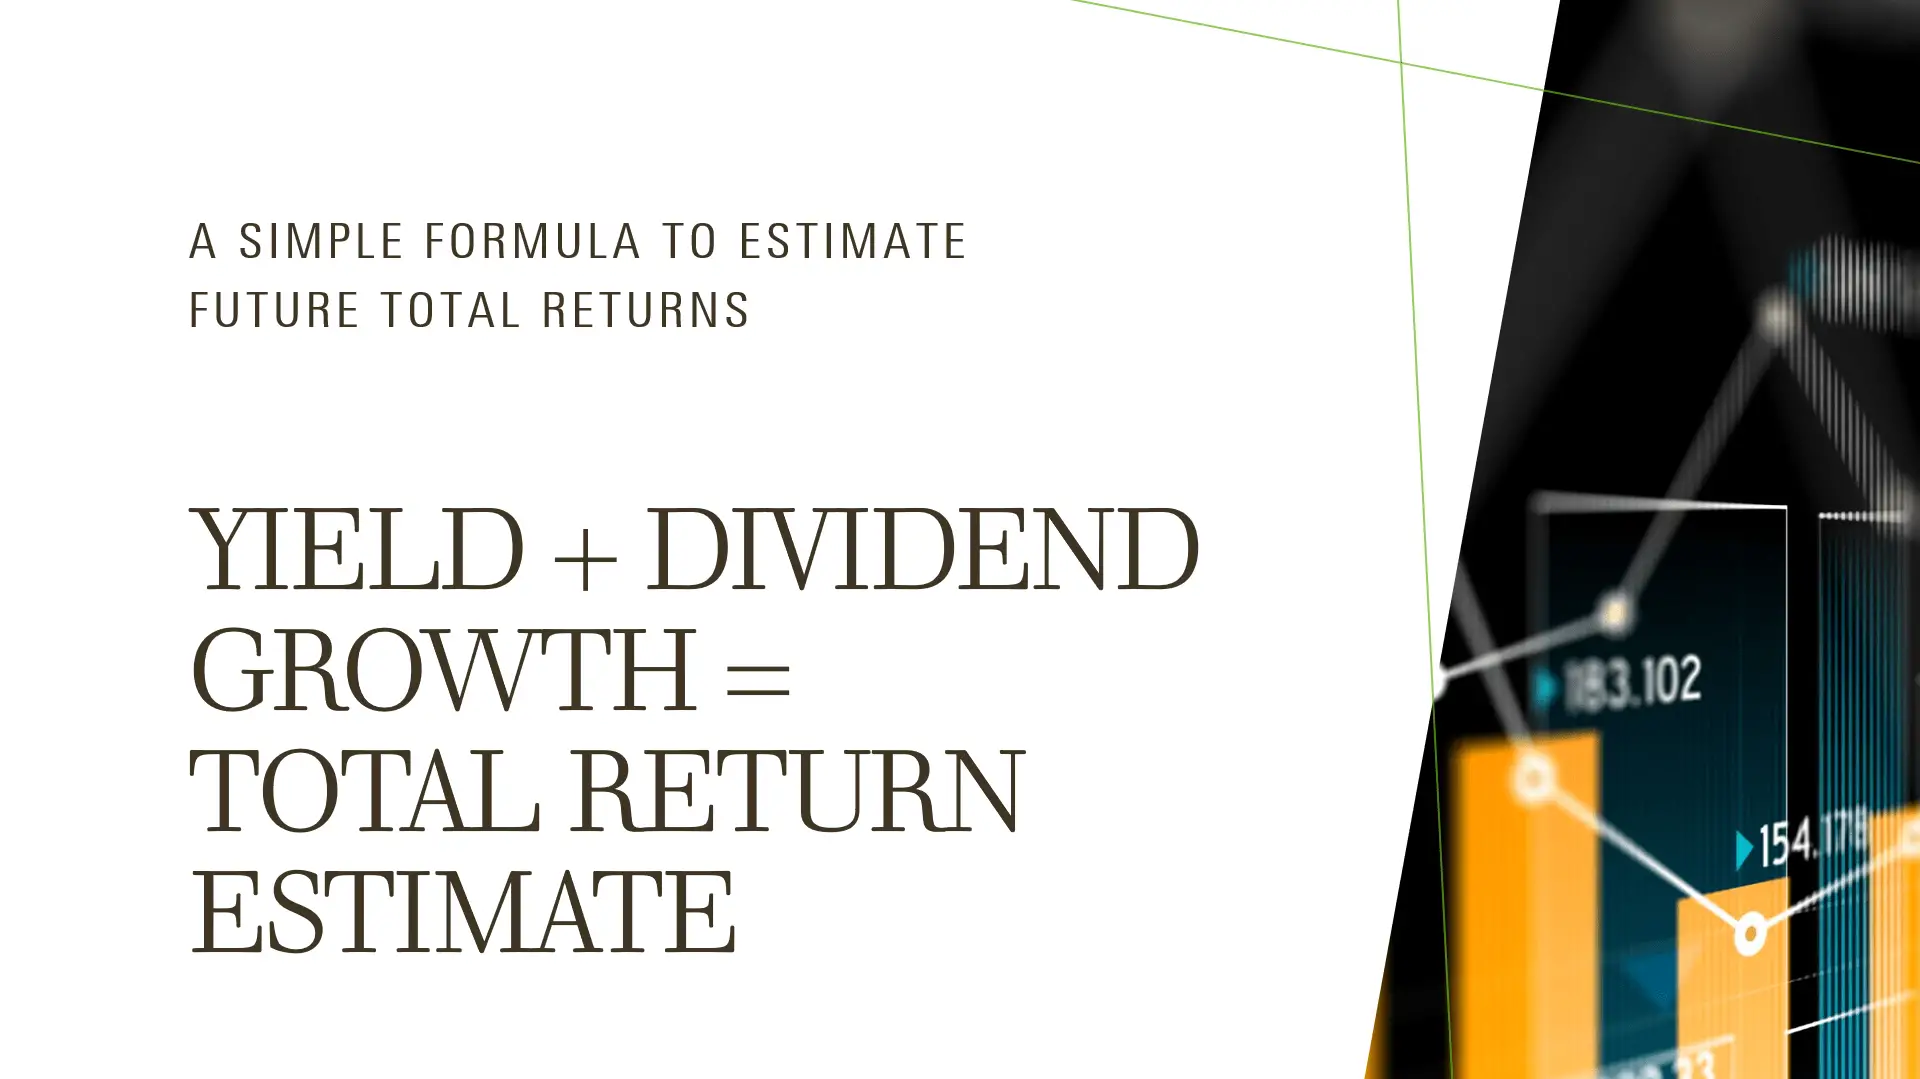 dividend yield formula